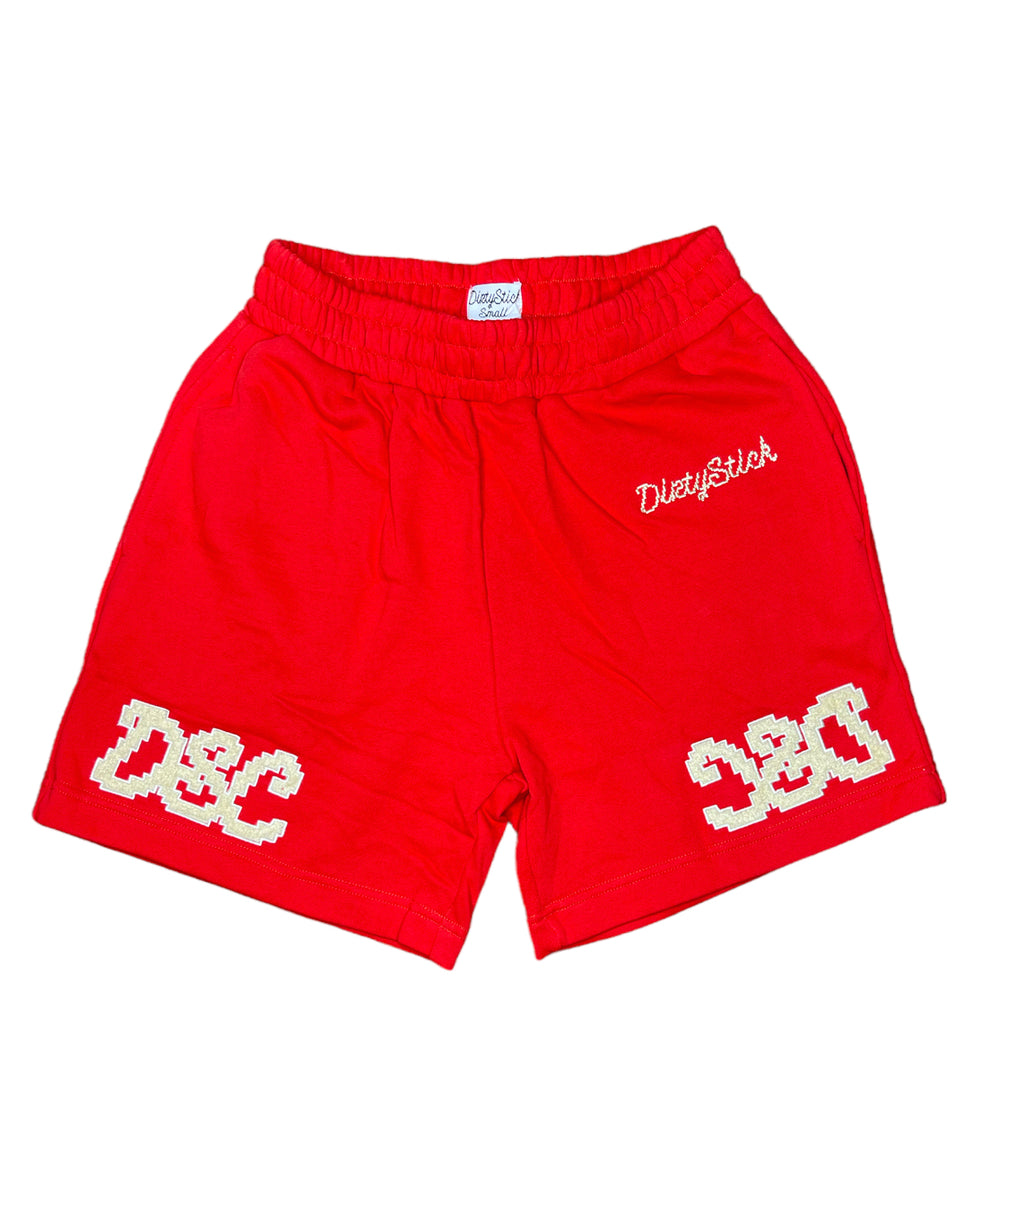 DirtyStick Red & Cream Shorts